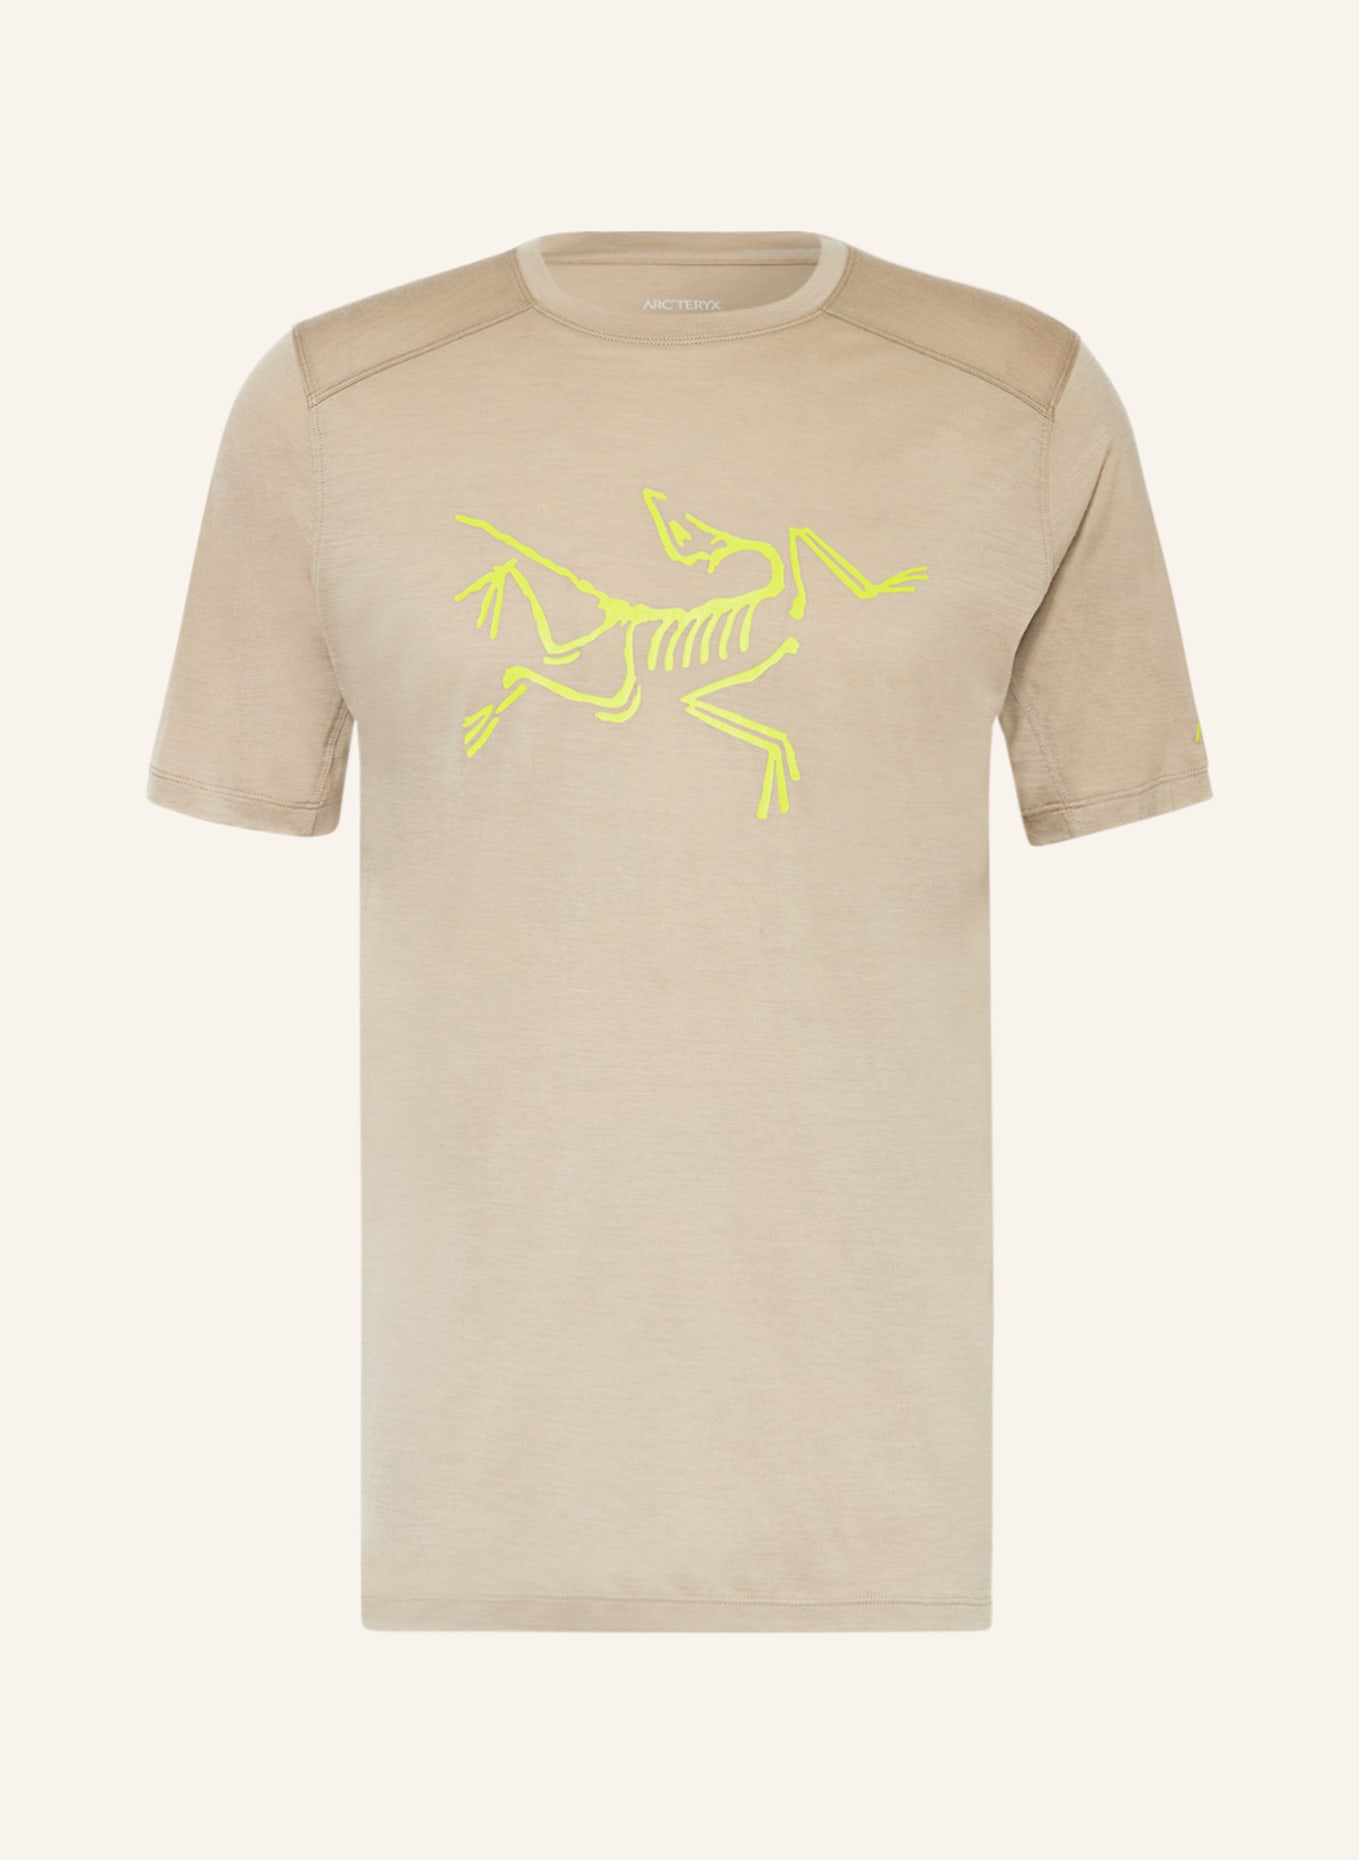 ARC'TERYX T-Shirt IONIA, Farbe: TAUPE (Bild 1)